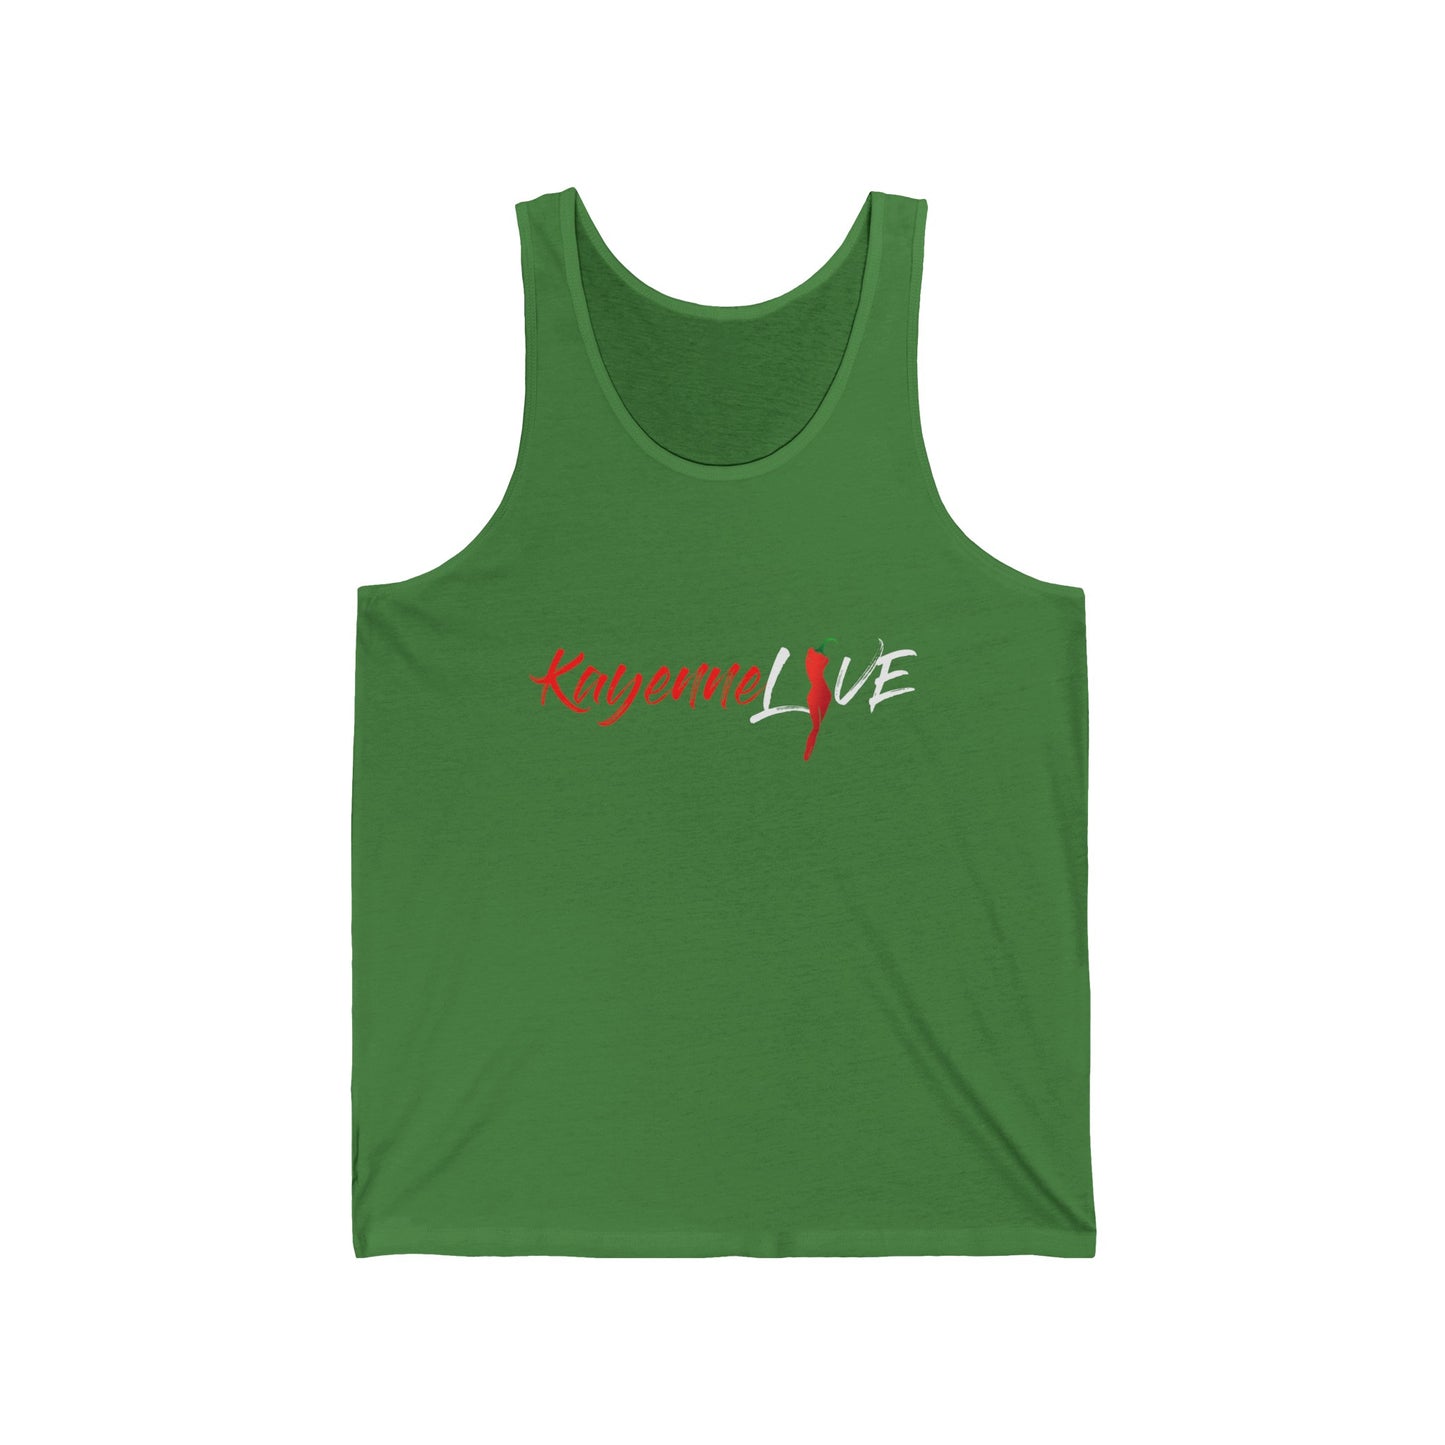 Kayenne Live White Logo_Unisex Jersey Tank